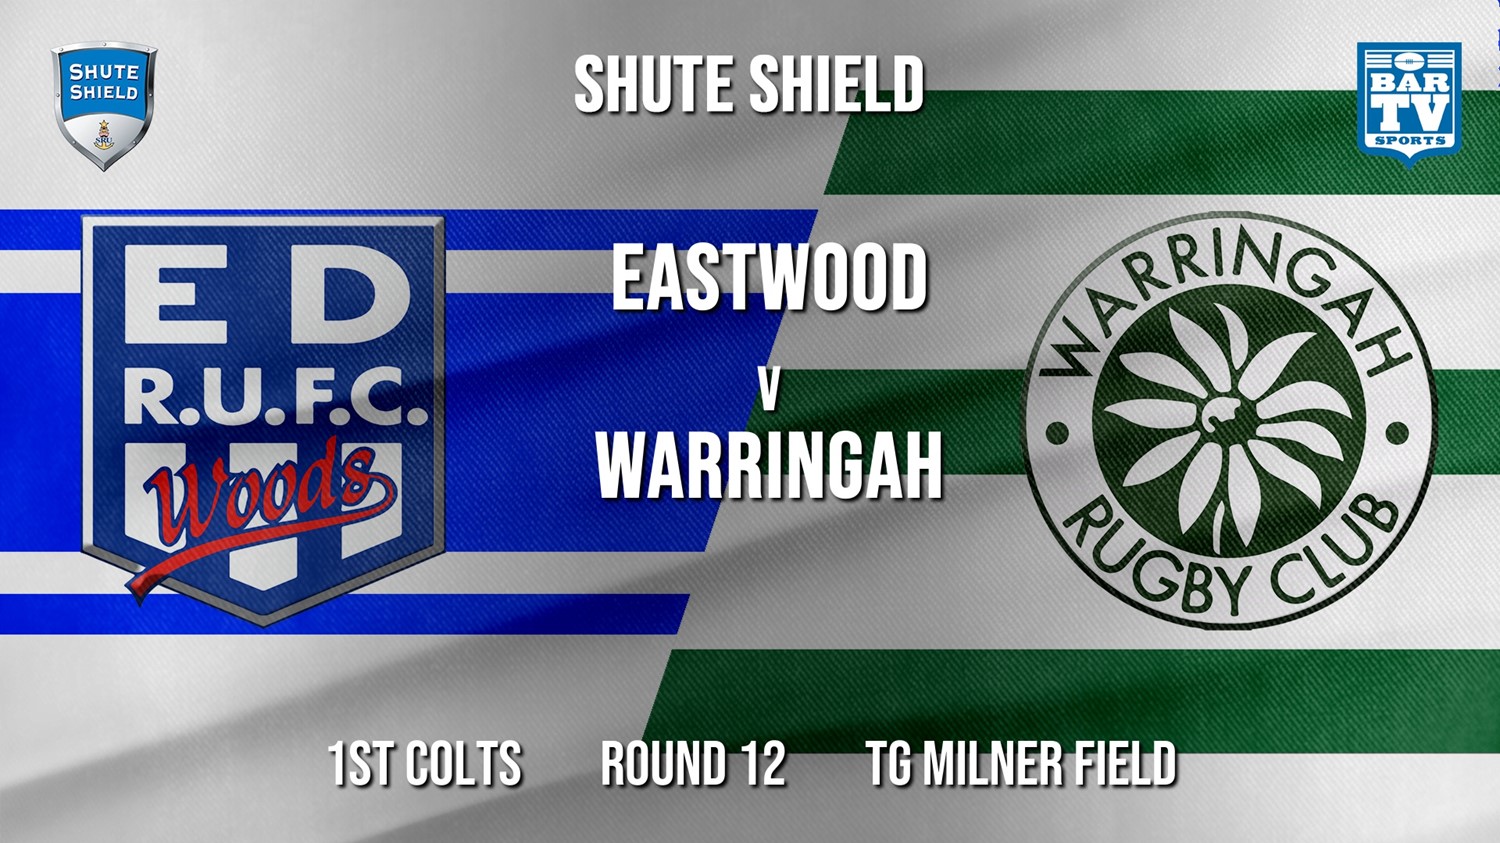 Shute Shield Round 12 - 1st Colts - Eastwood v Warringah Minigame Slate Image